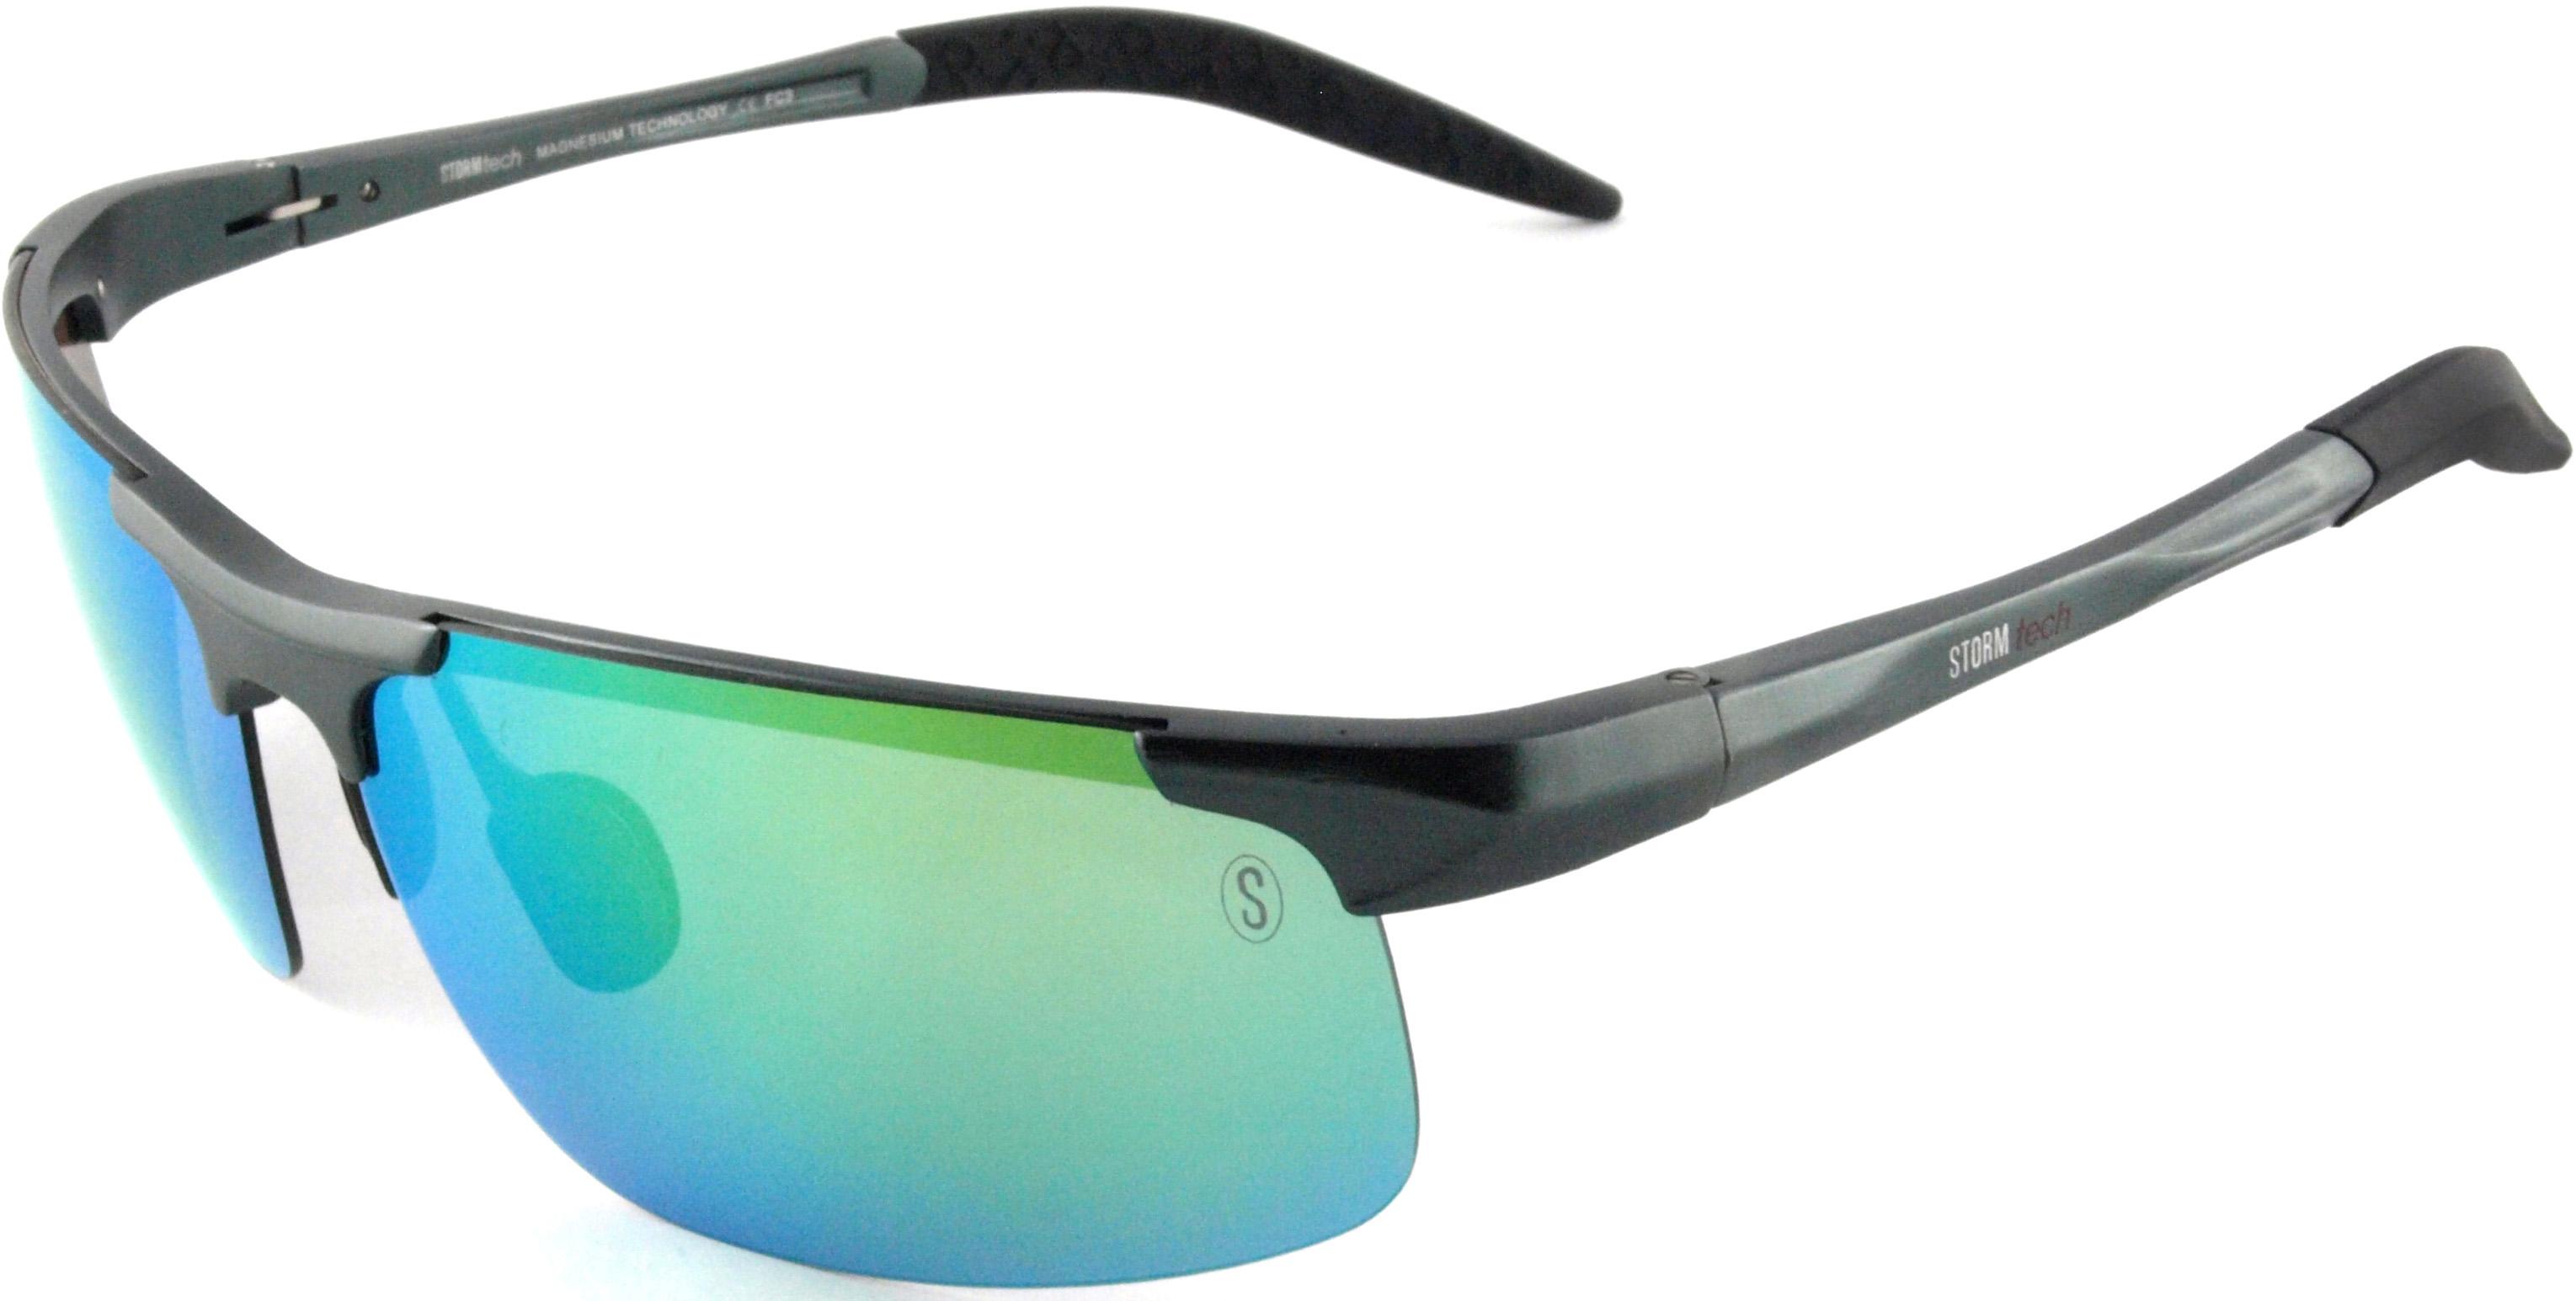 Stormtech Enyeus Sunglasses - Blue And Black